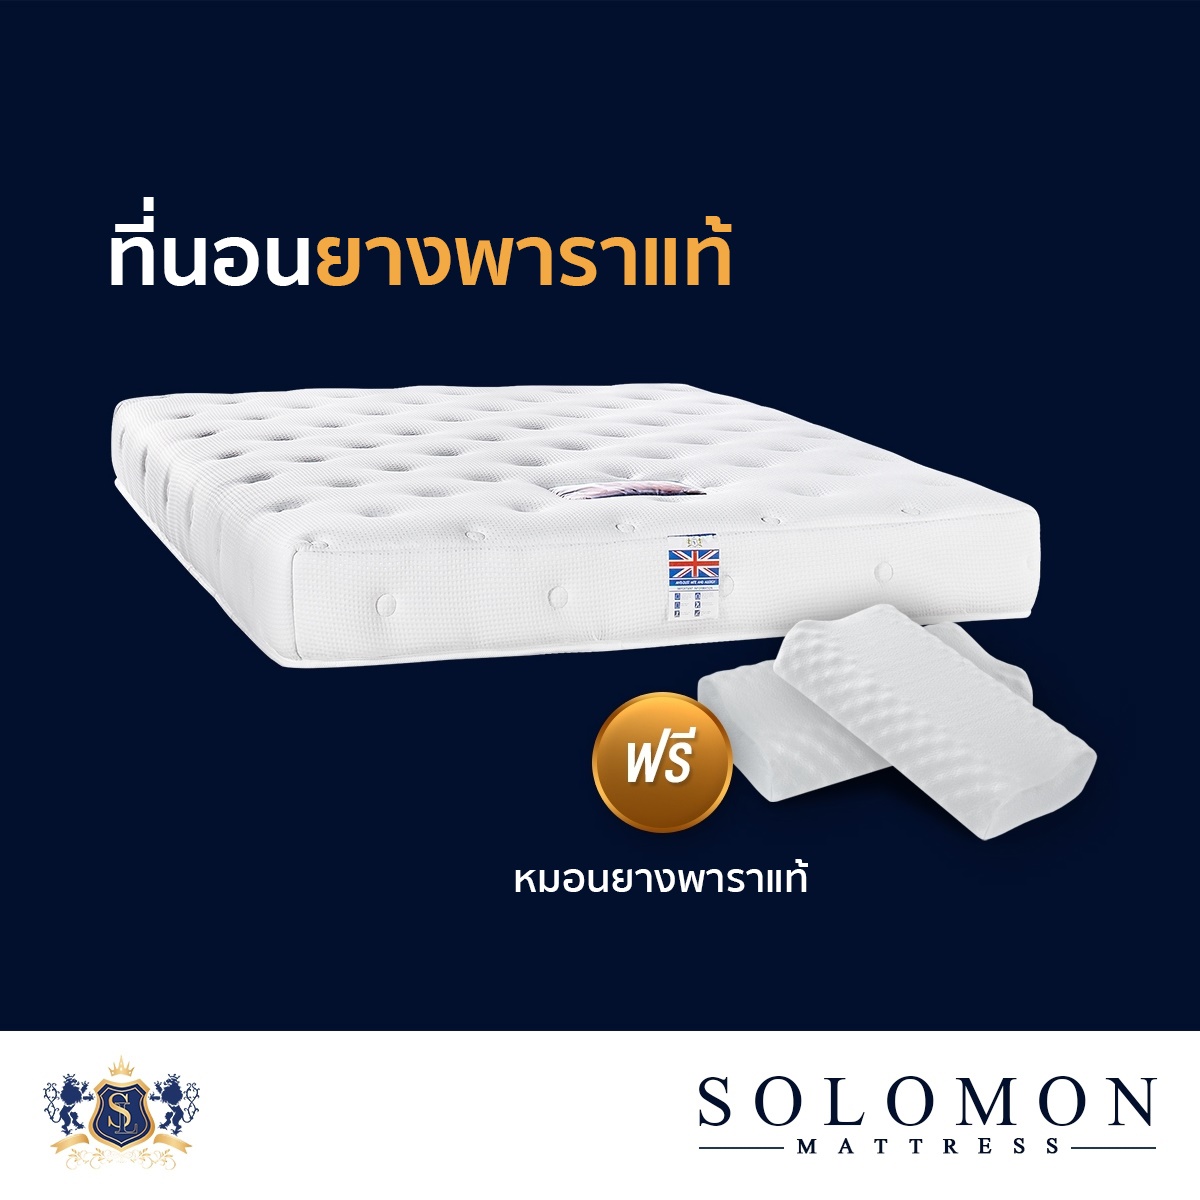 Solomon mattress ที่นอน ยางพารา ผ้านุ่มขาว คิ้วเดียว ตัวหนา รุ่น Para Southern ขนาด 3.5 / 5 / 6 ฟุต 6นิ้ว ฟรี หมอนยางพาราแท้ 2ใบ ราคา 1490 บาท